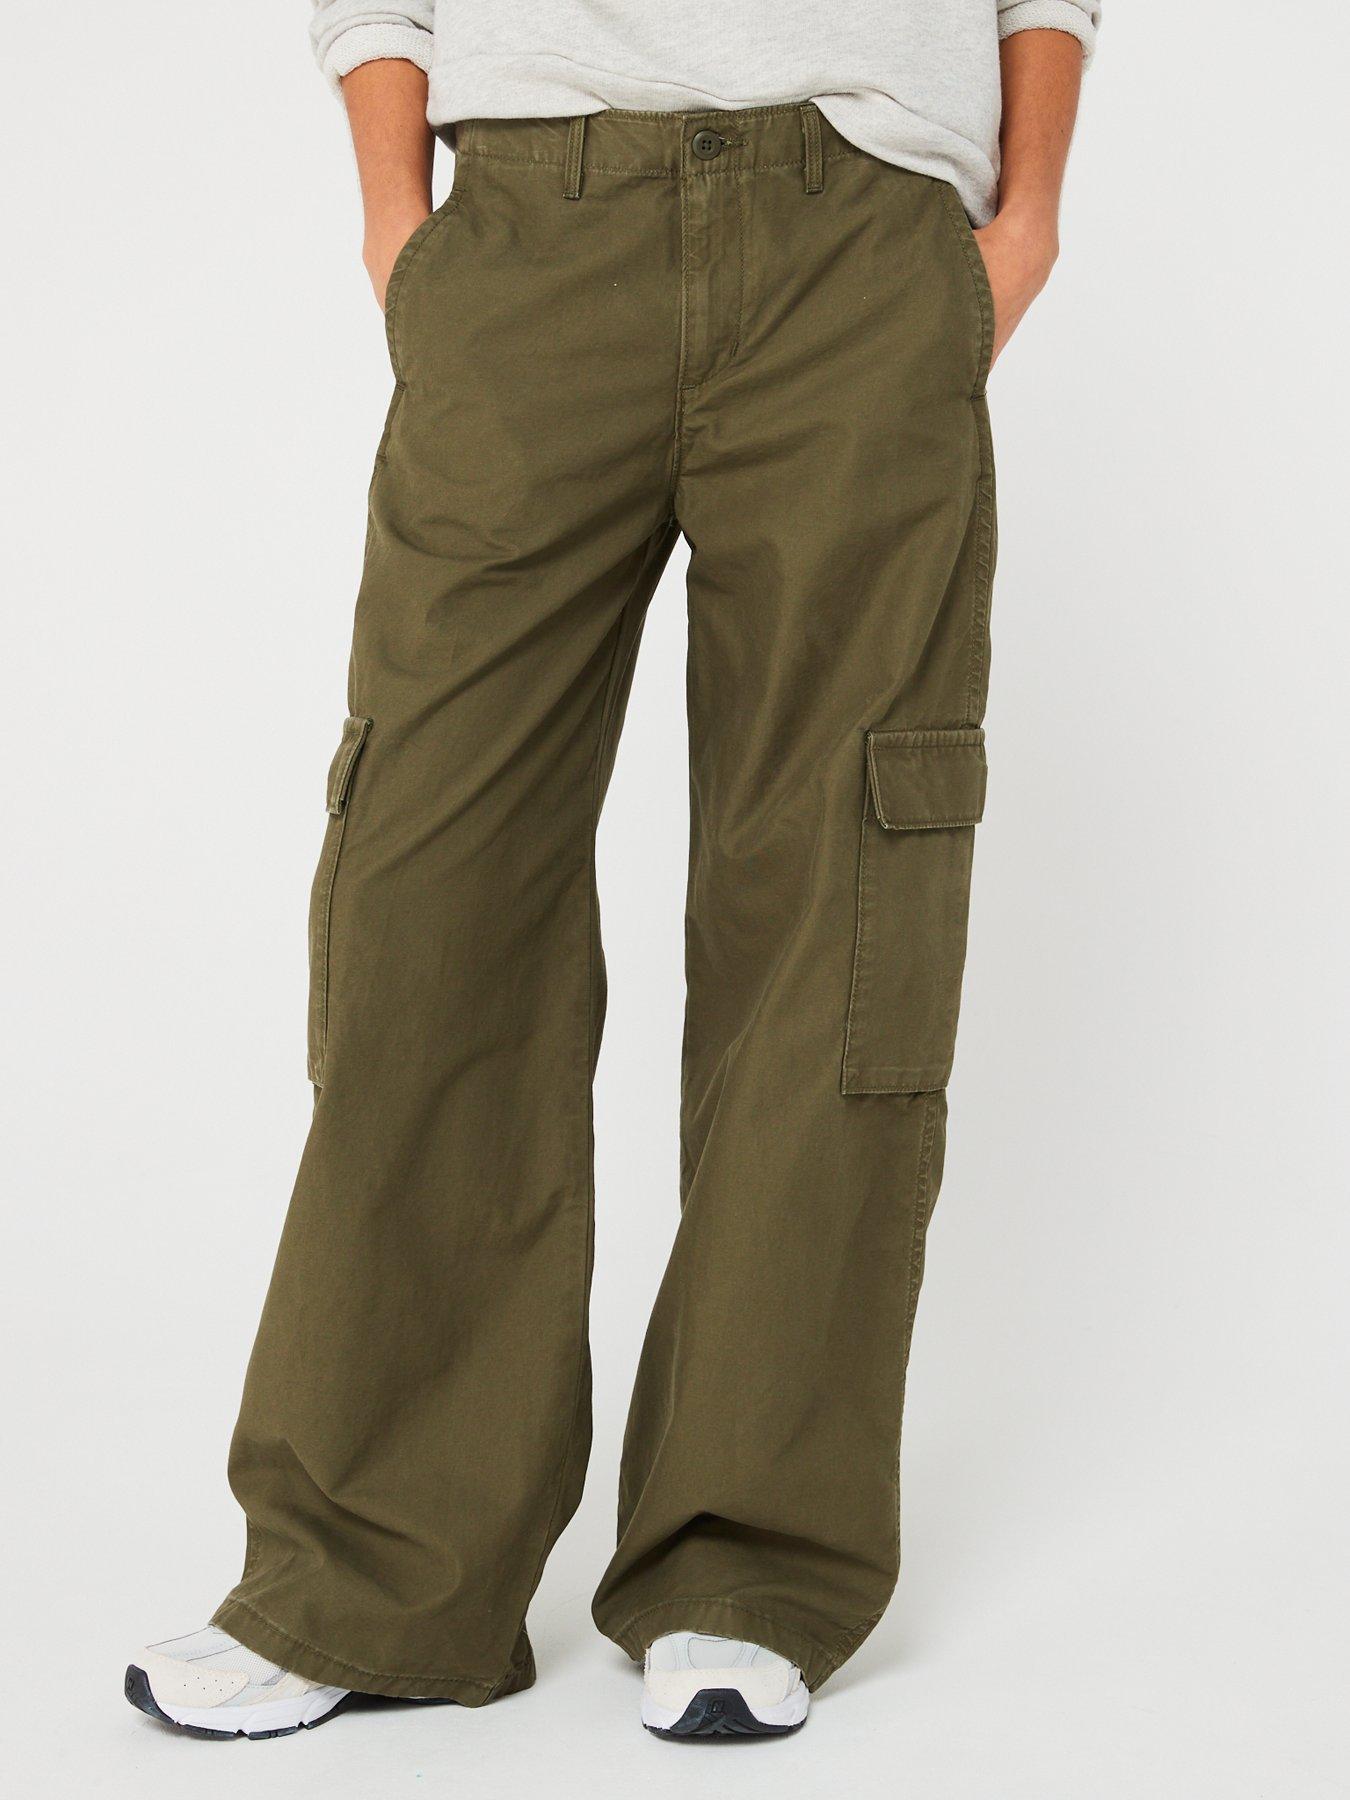 Women High Waist Cotton Linen Trousers Ladies Baggy Wide Leg Bottom Pants  S-3XL | eBay